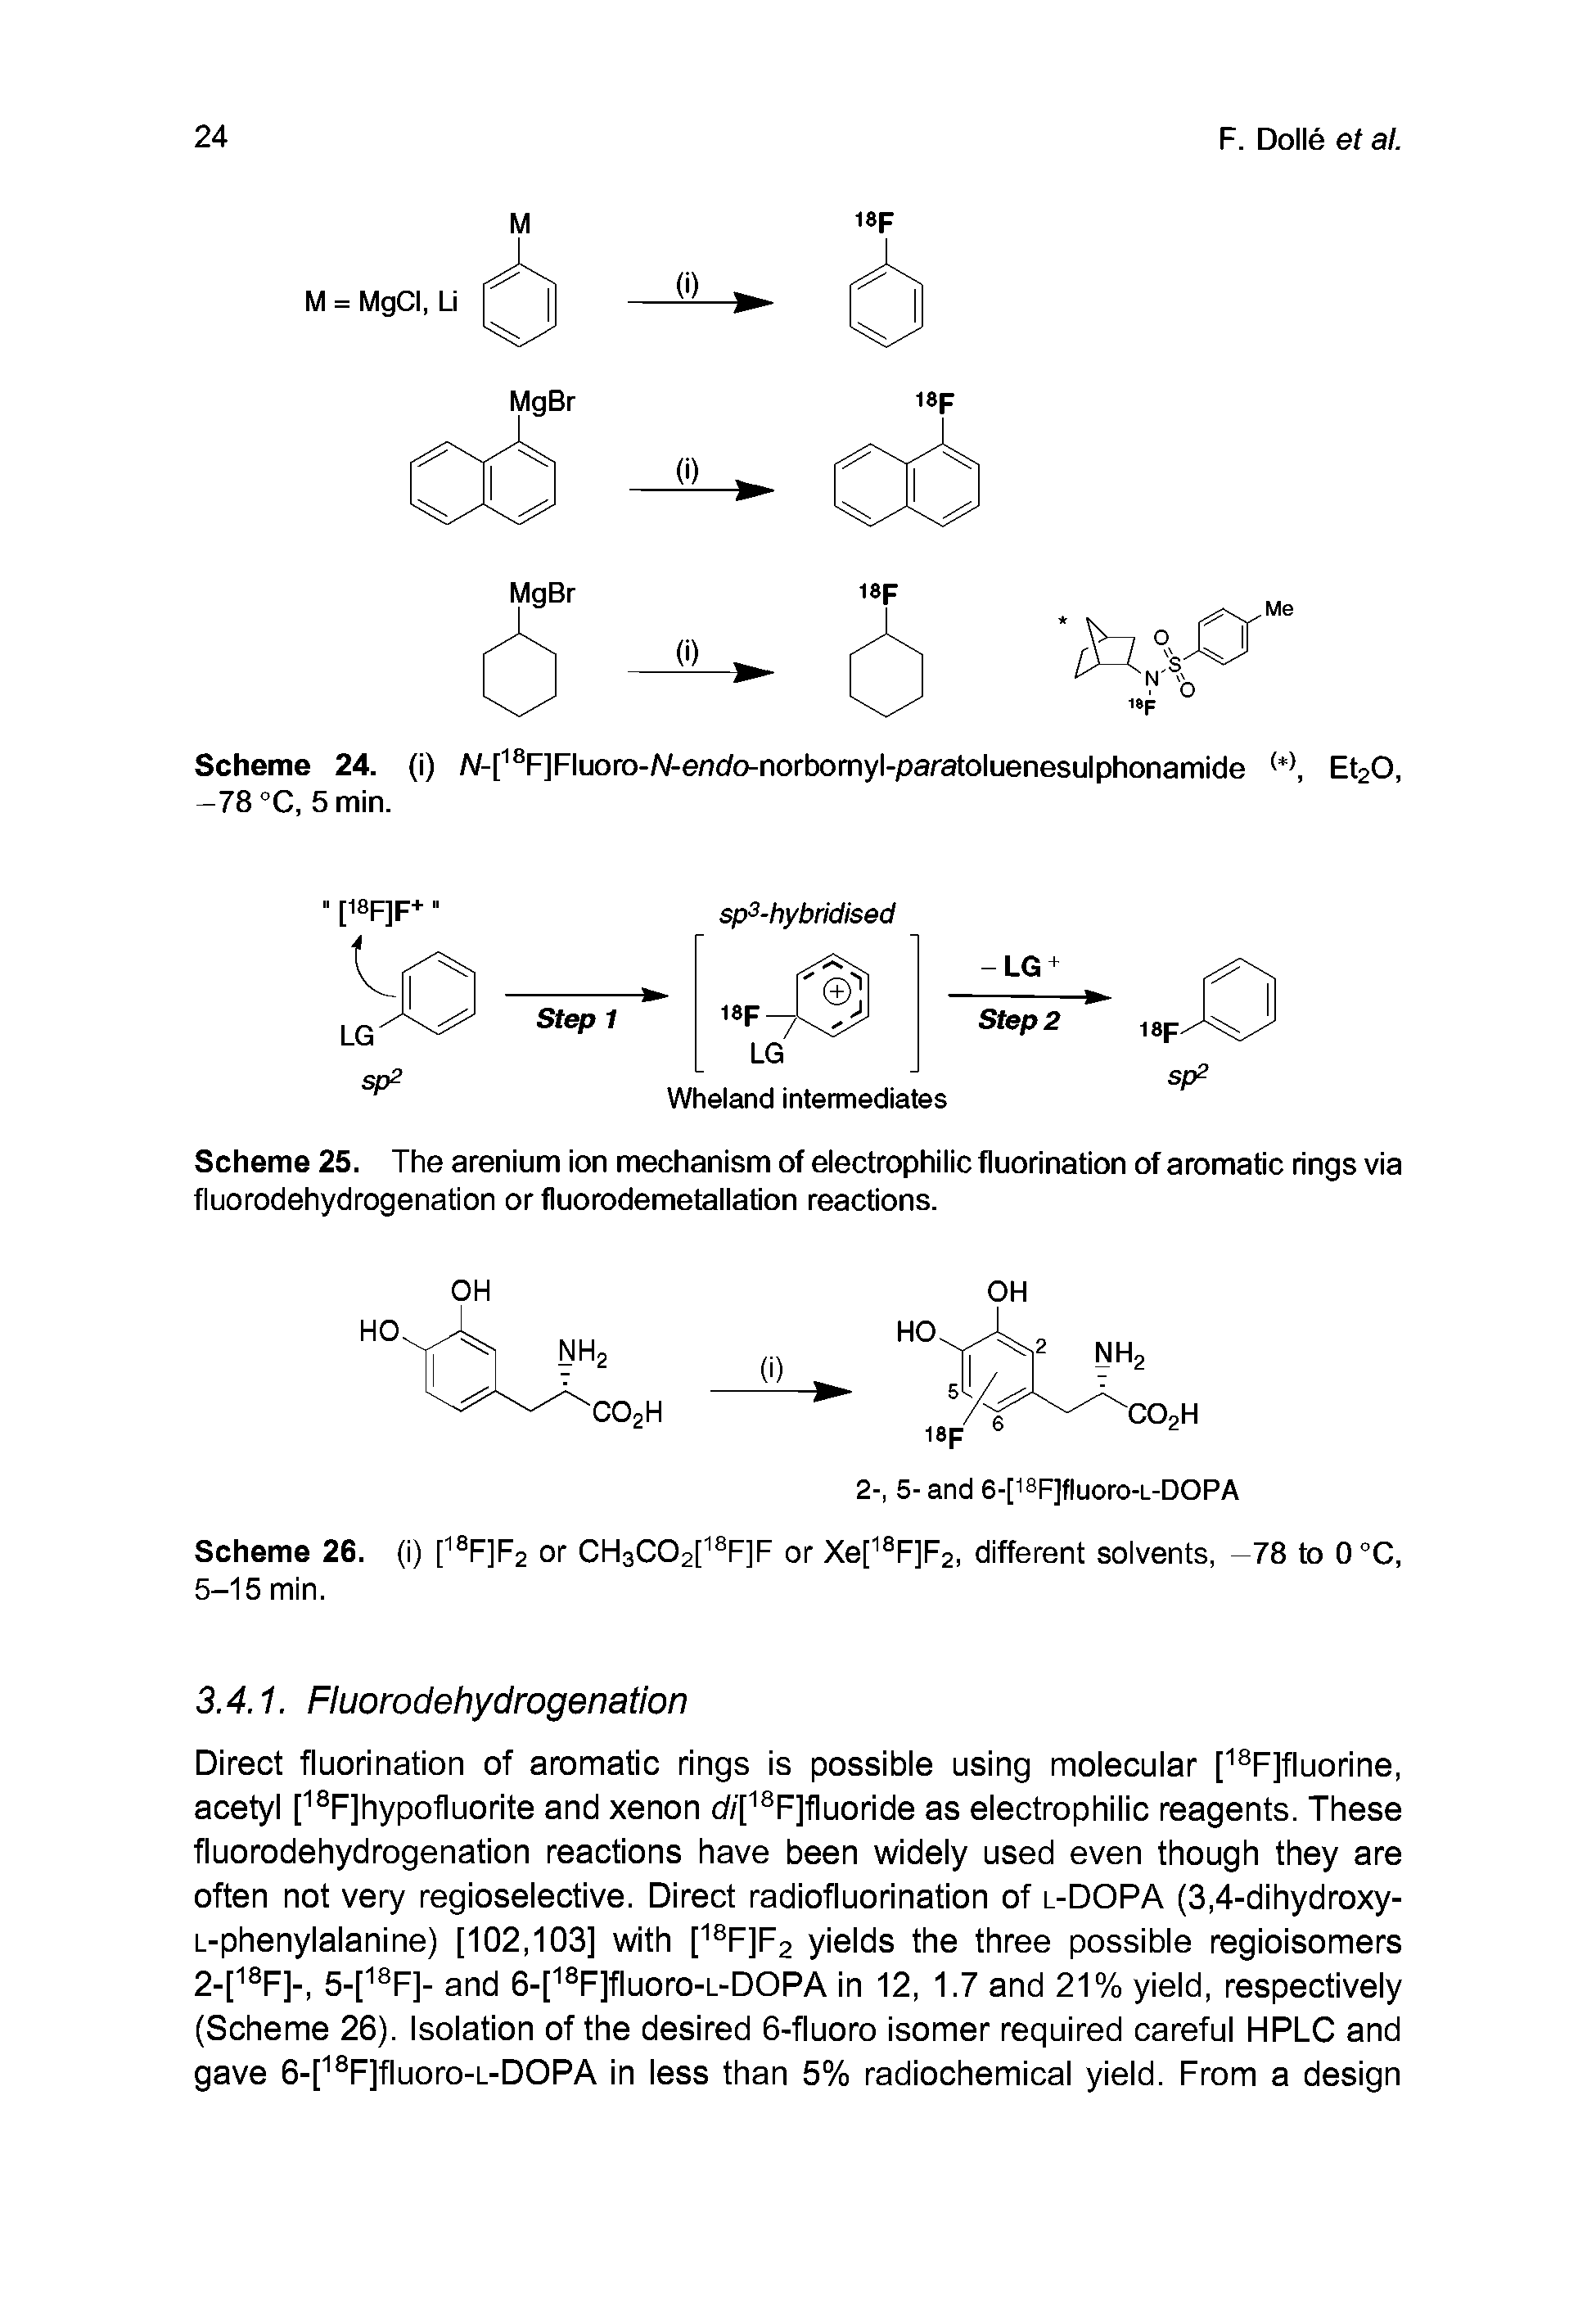 Scheme 25. The arenium ion mechanism of electrophilic fluorination of aromatic rings via fluorodehydrogenation or fluorodemetallation reactions.